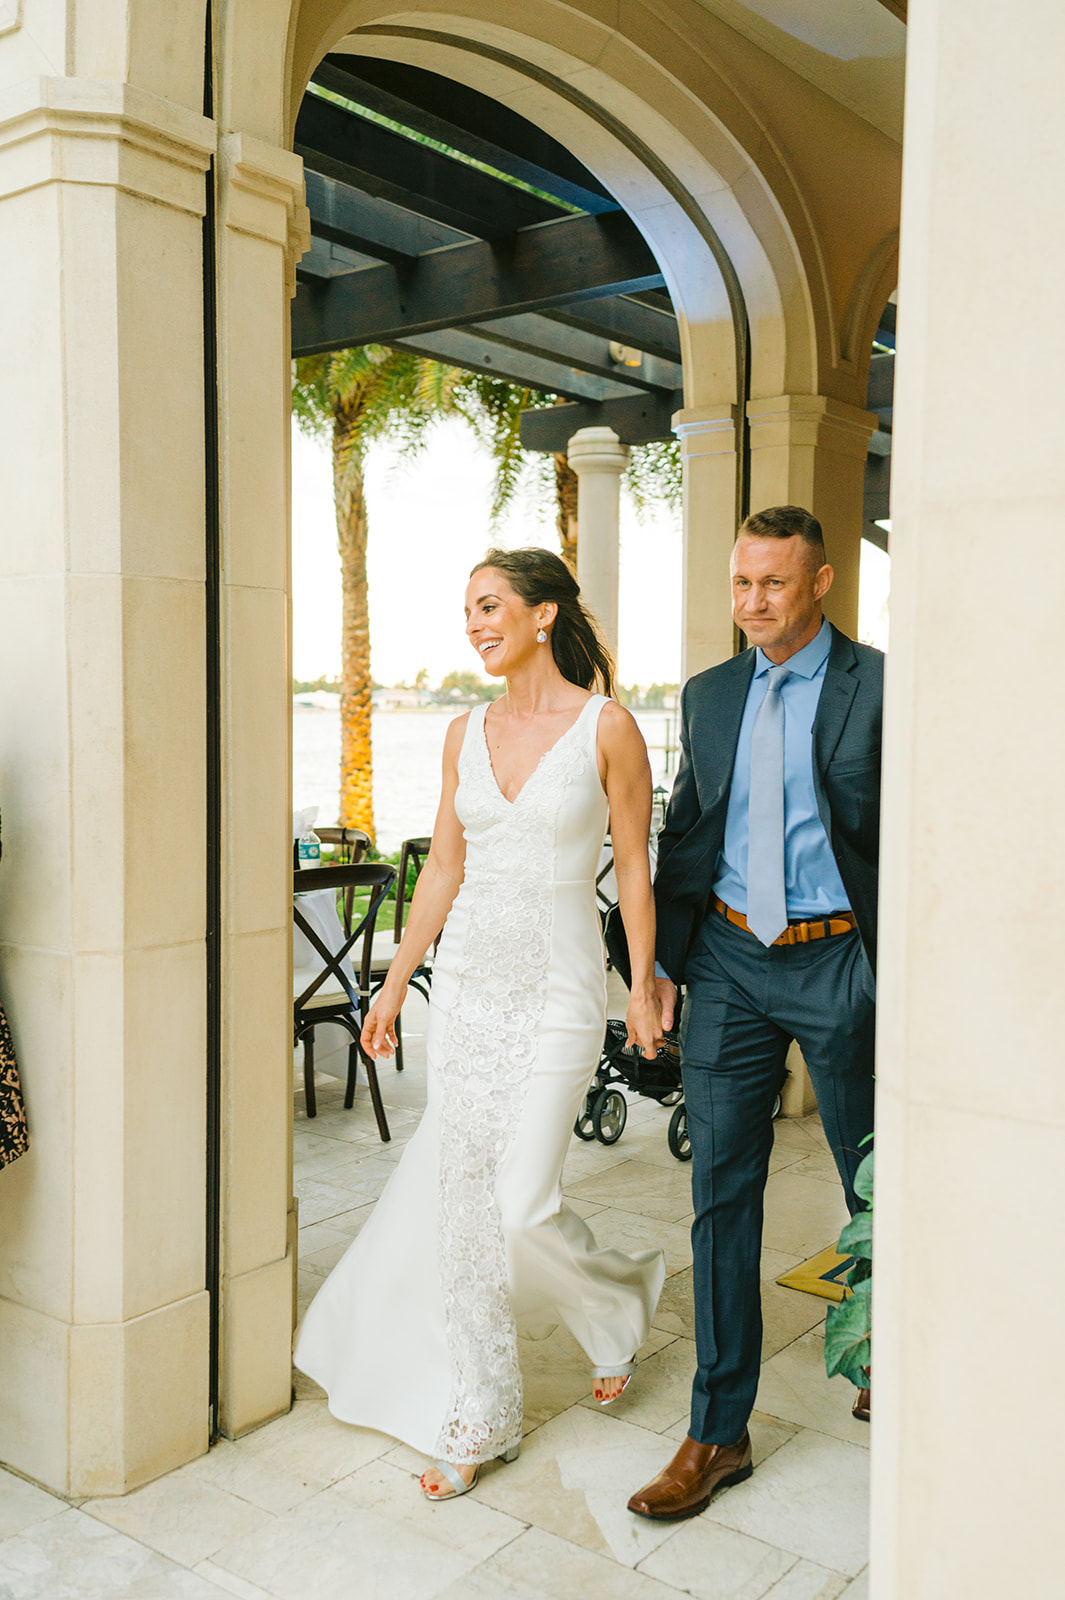 Naples Florida wedding photographer captures the bride walking down the aisle
